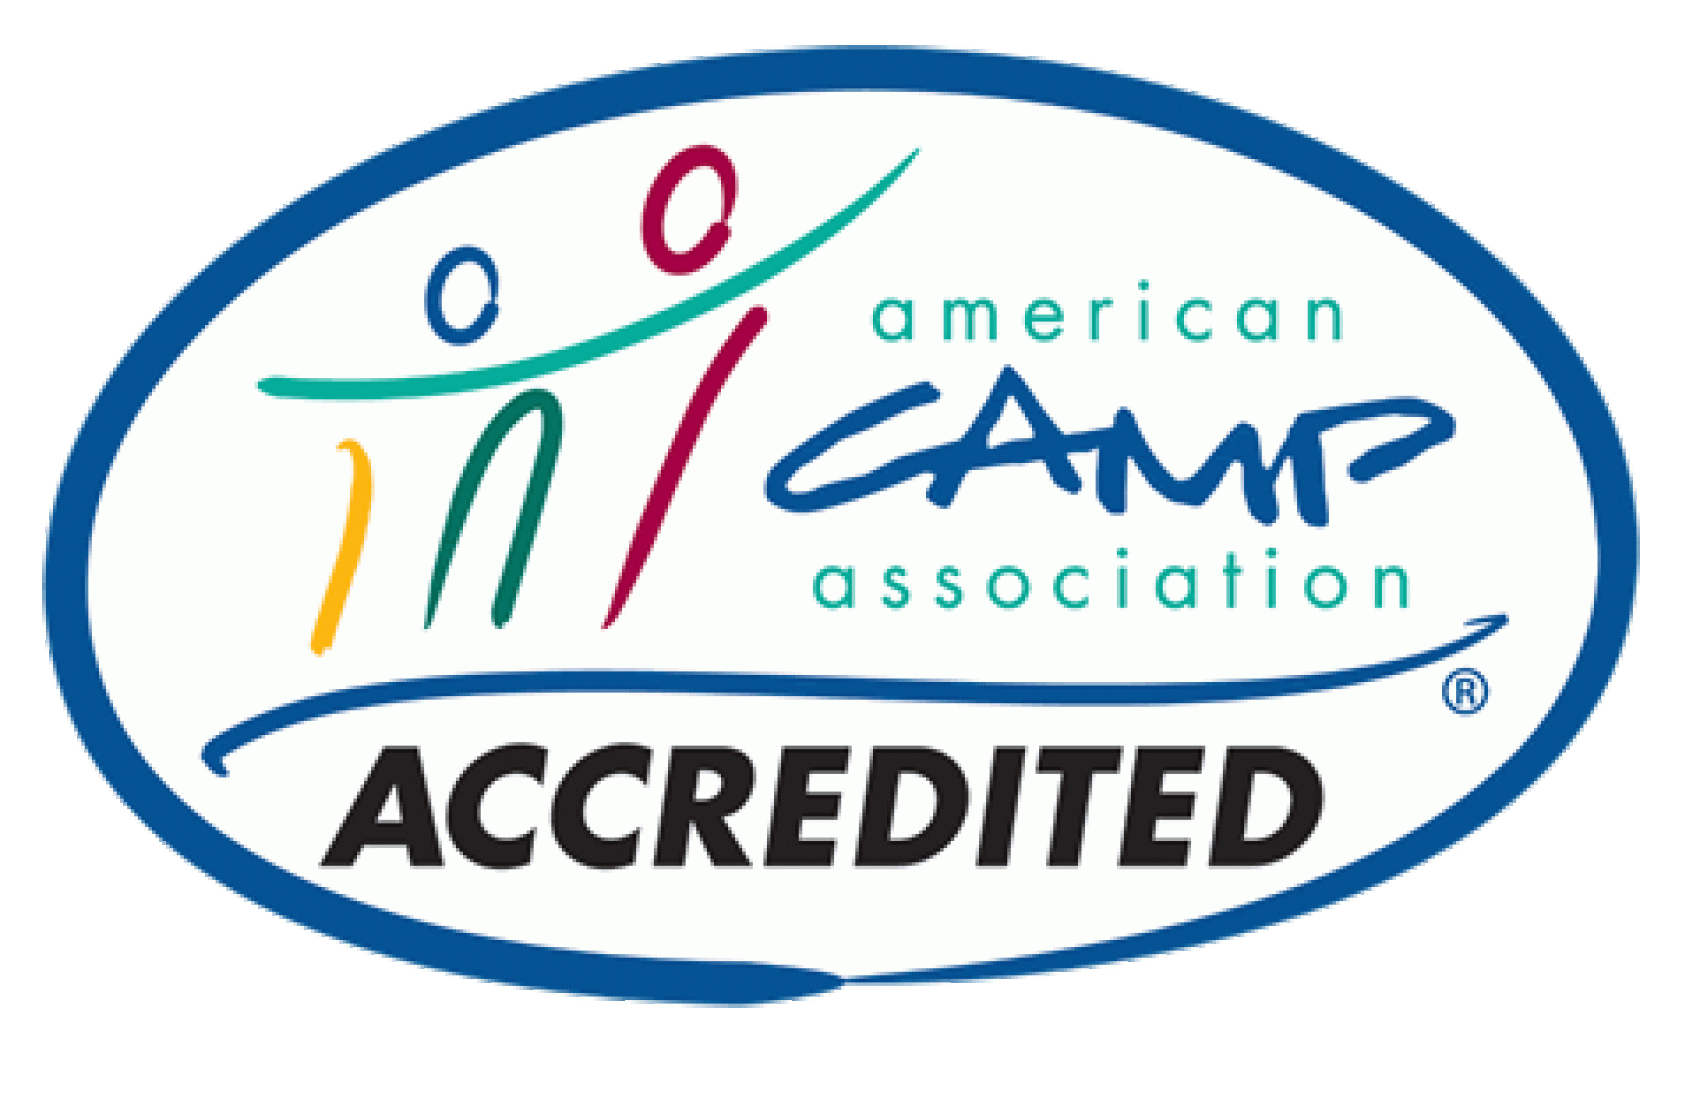 Accredited camp logo